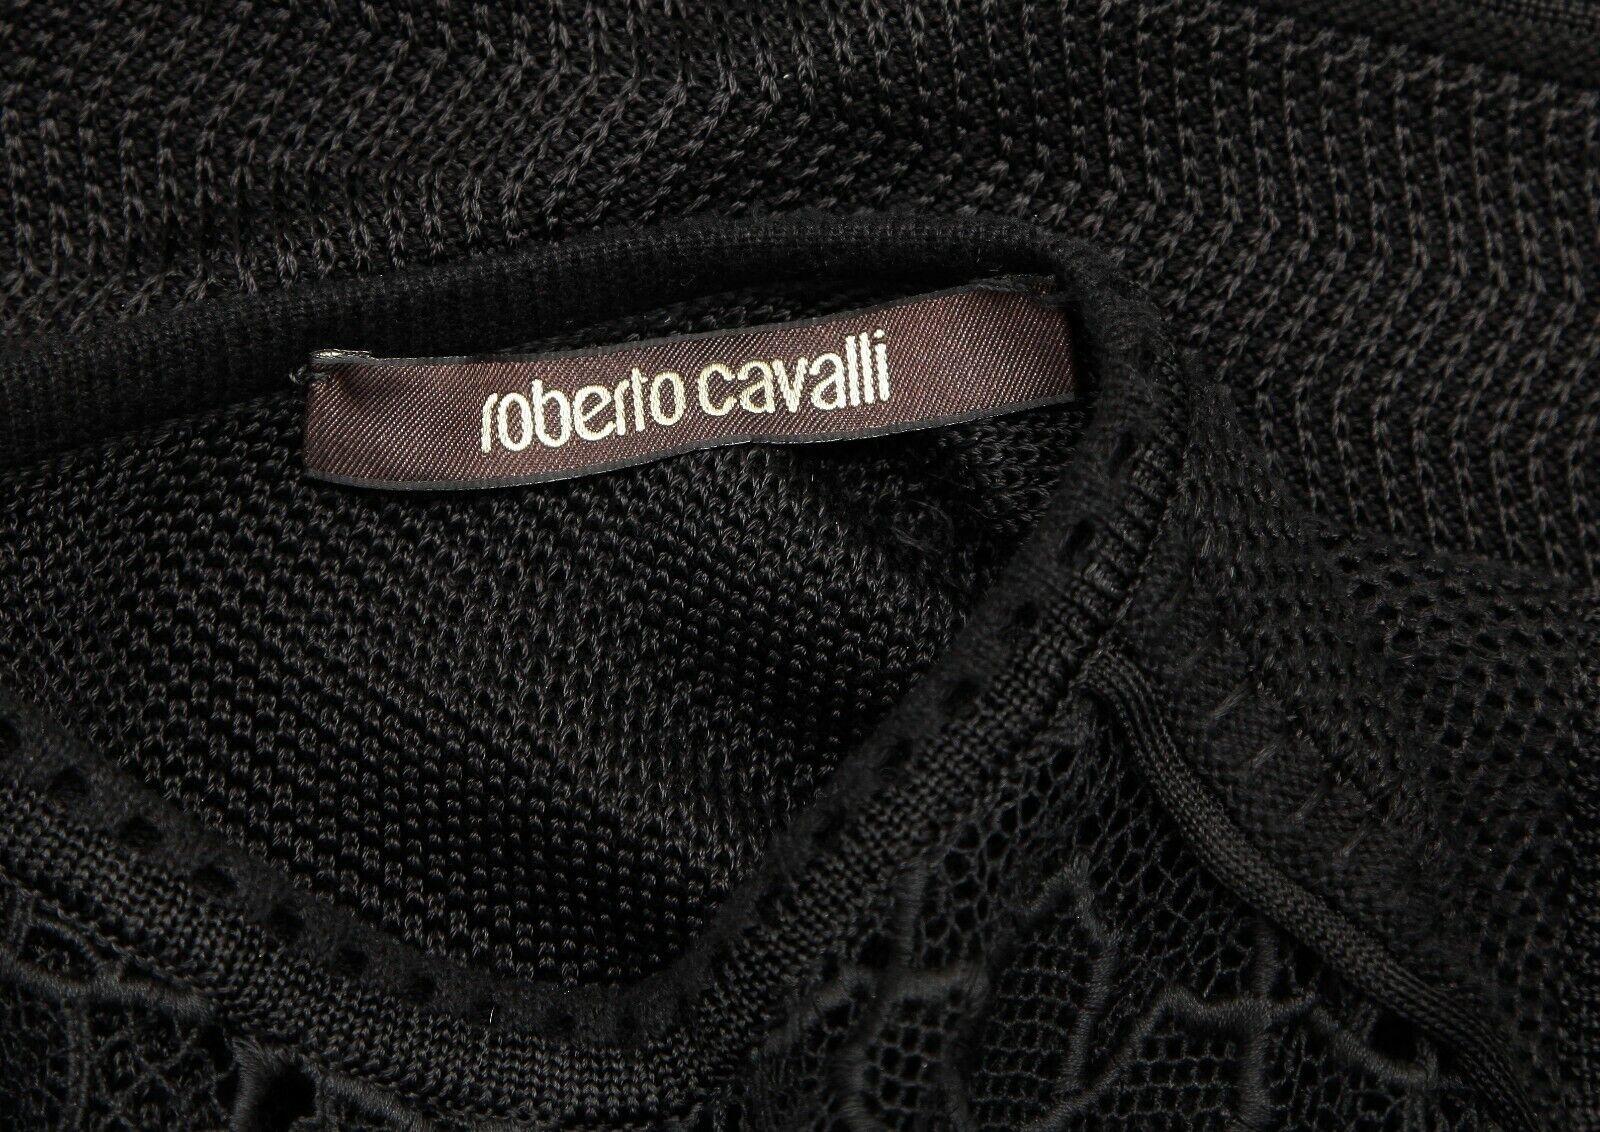 ROBERTO CAVALLI Black Knit Dress Sleeveless Viscose Elastane Slip-On Sz 44 For Sale 4